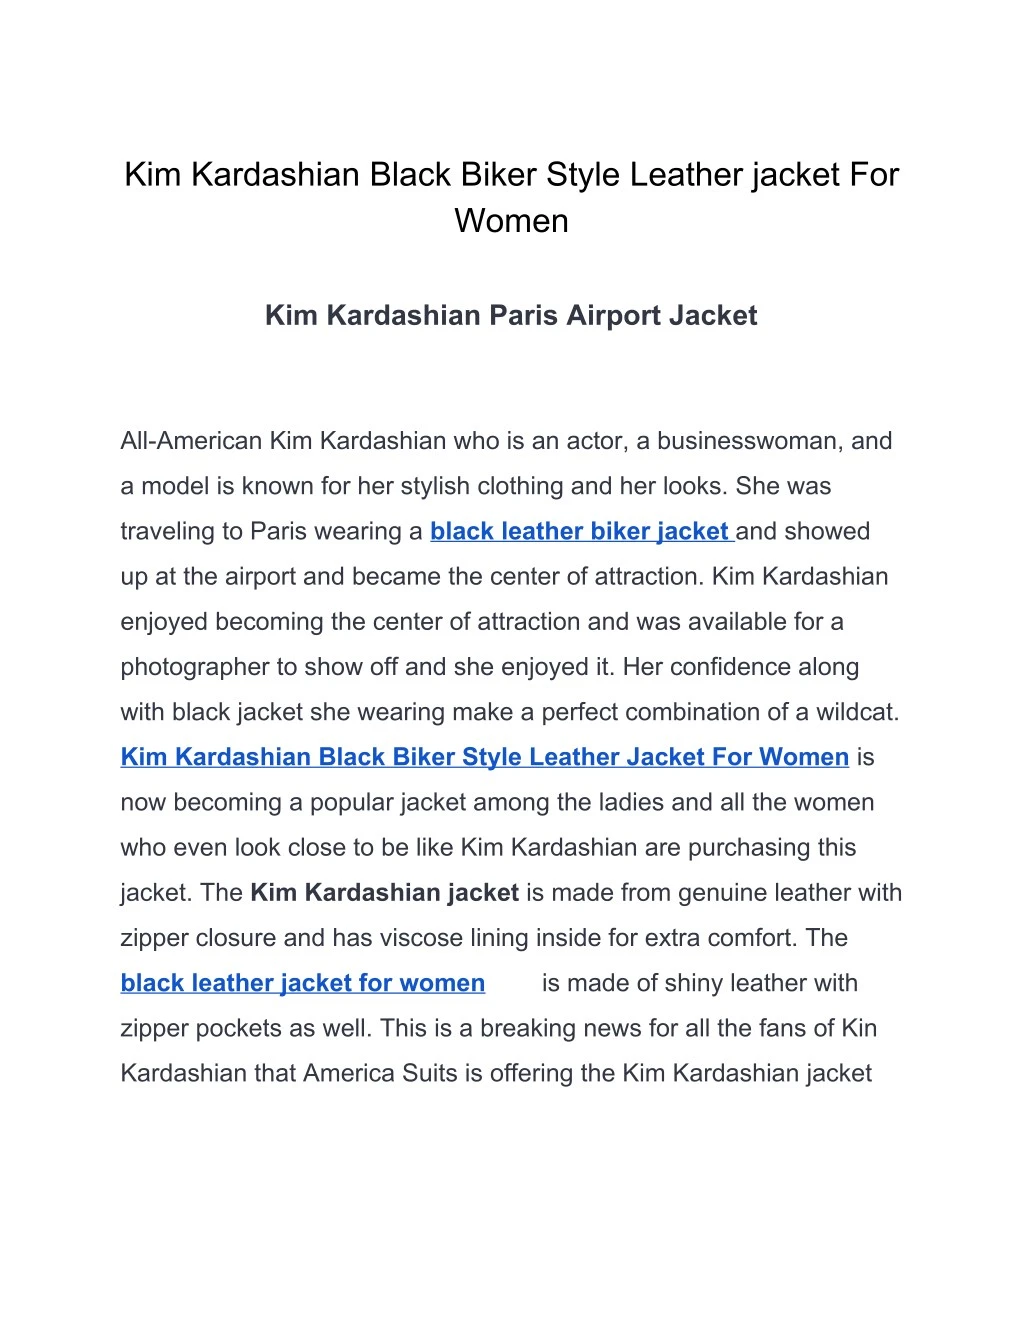 kim kardashian black biker style leather jacket